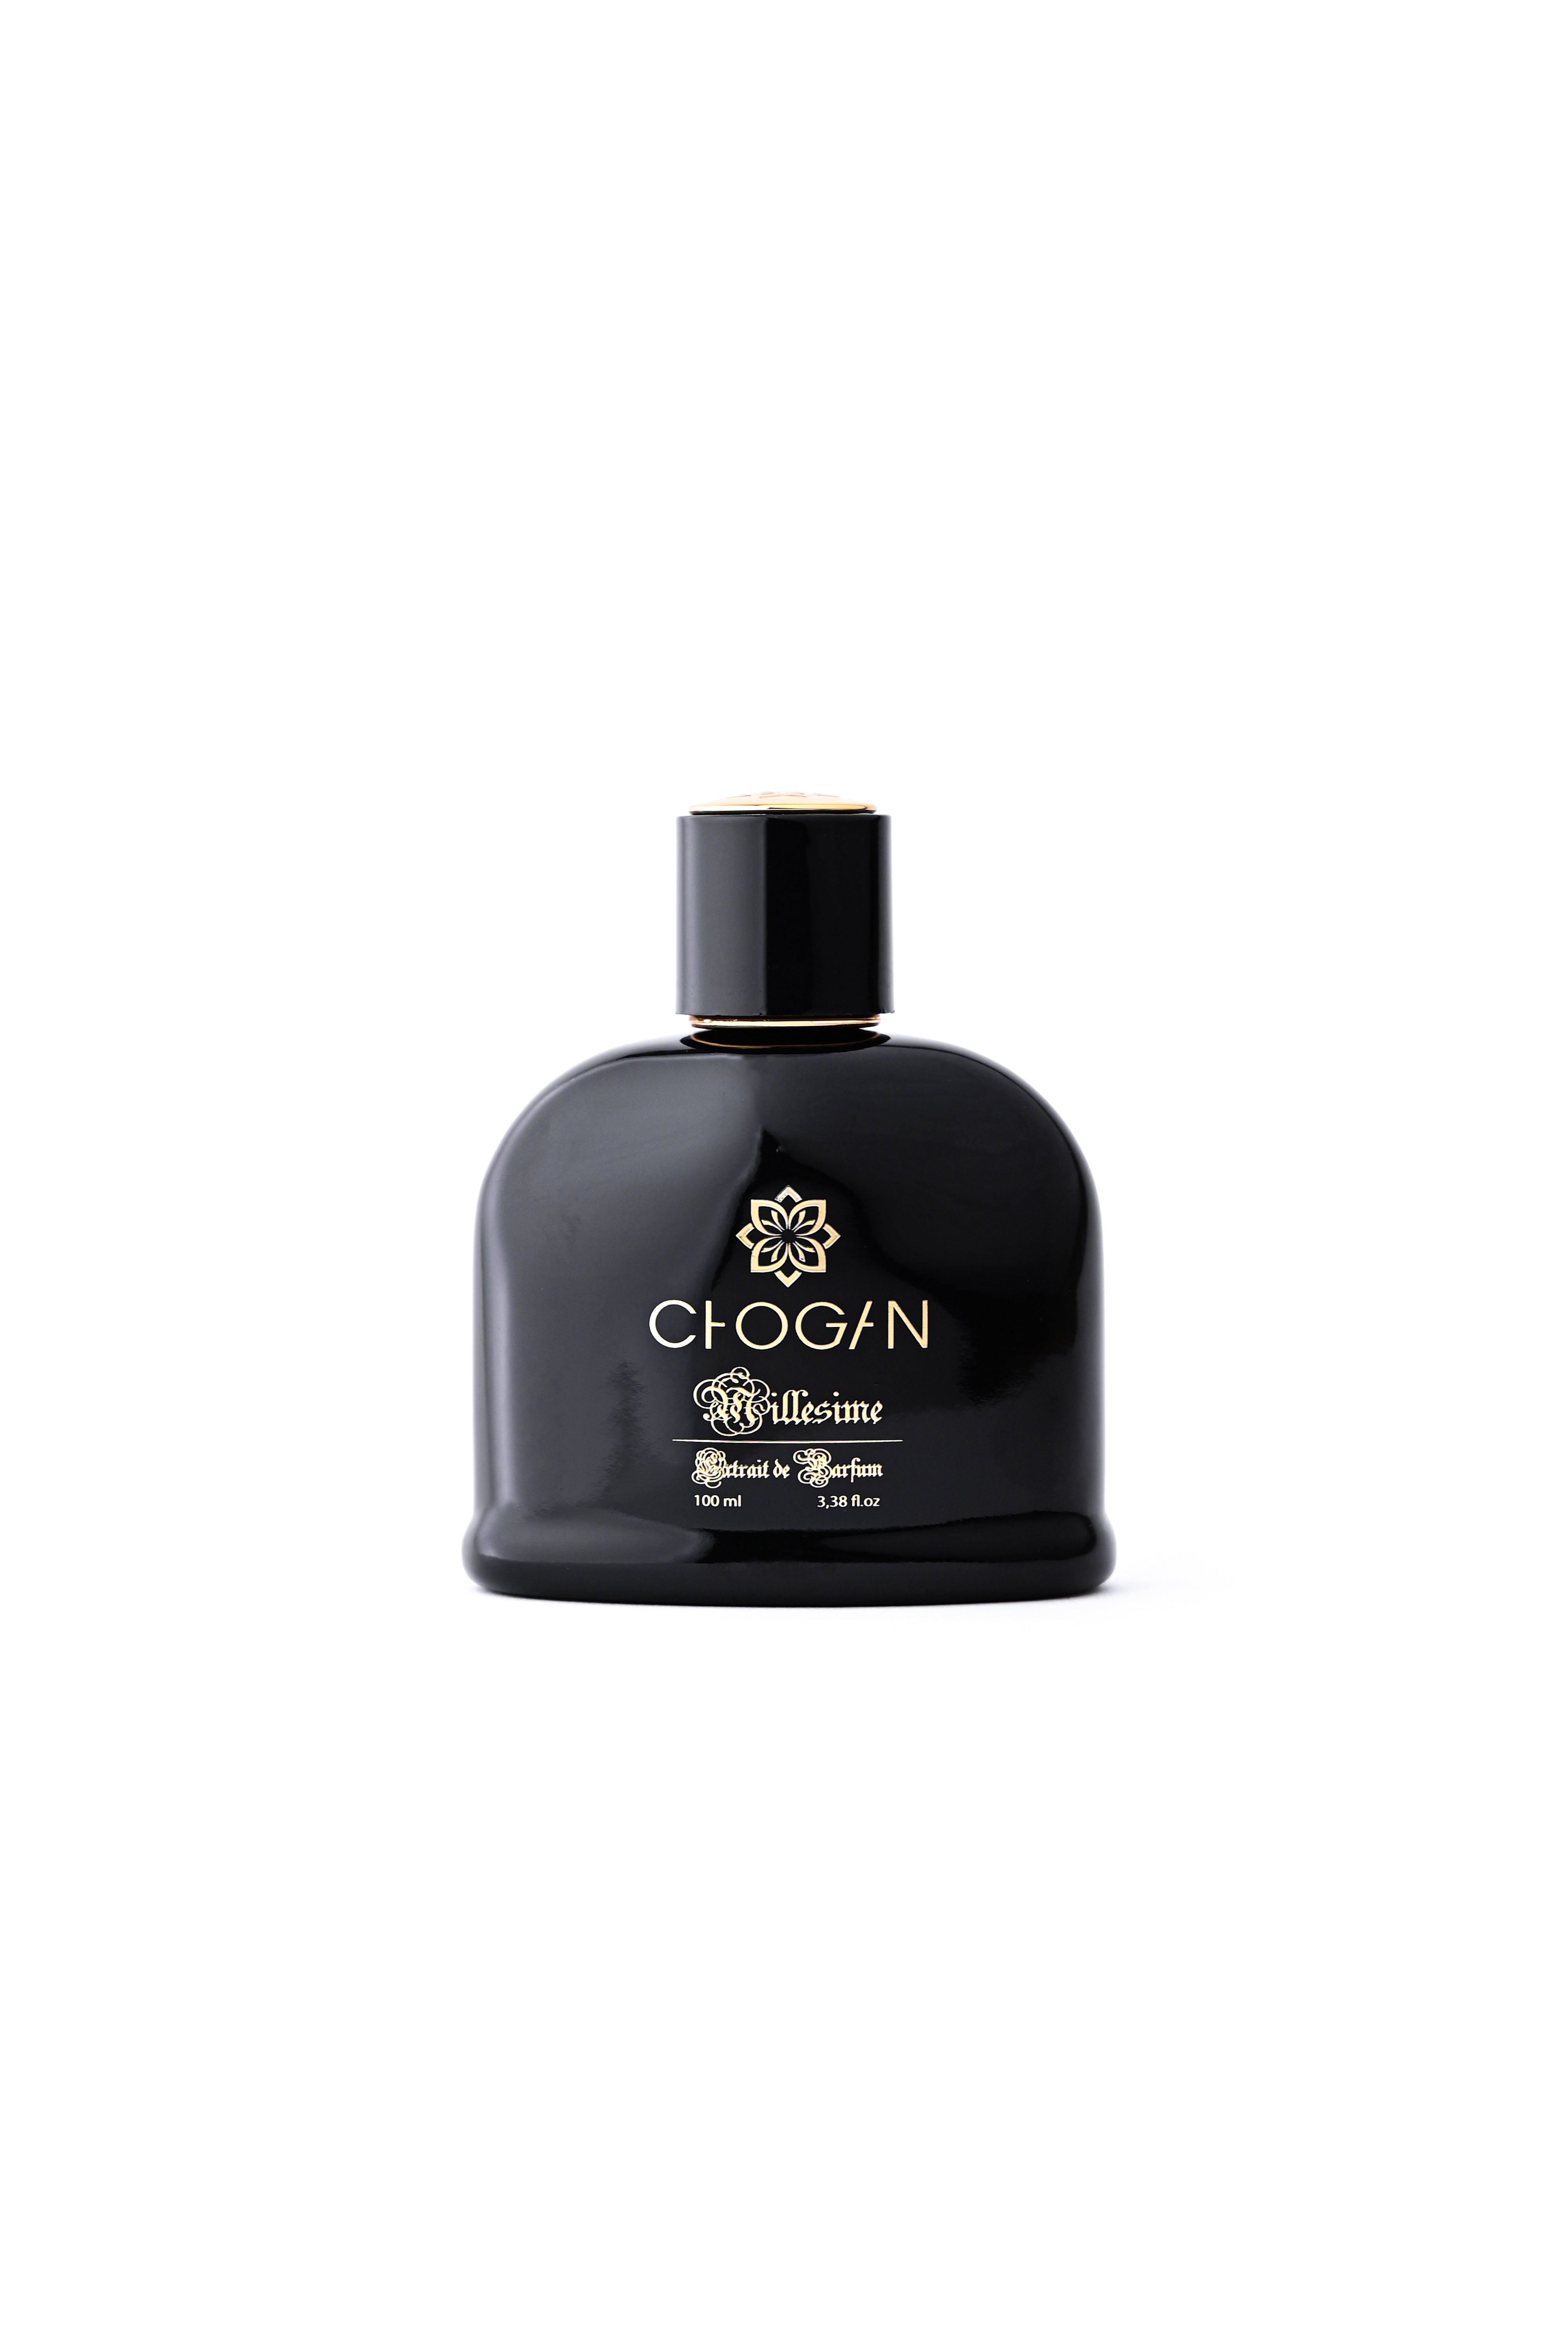 Chogan Men's Fragrance - 33 Oriental Woody Citrus 